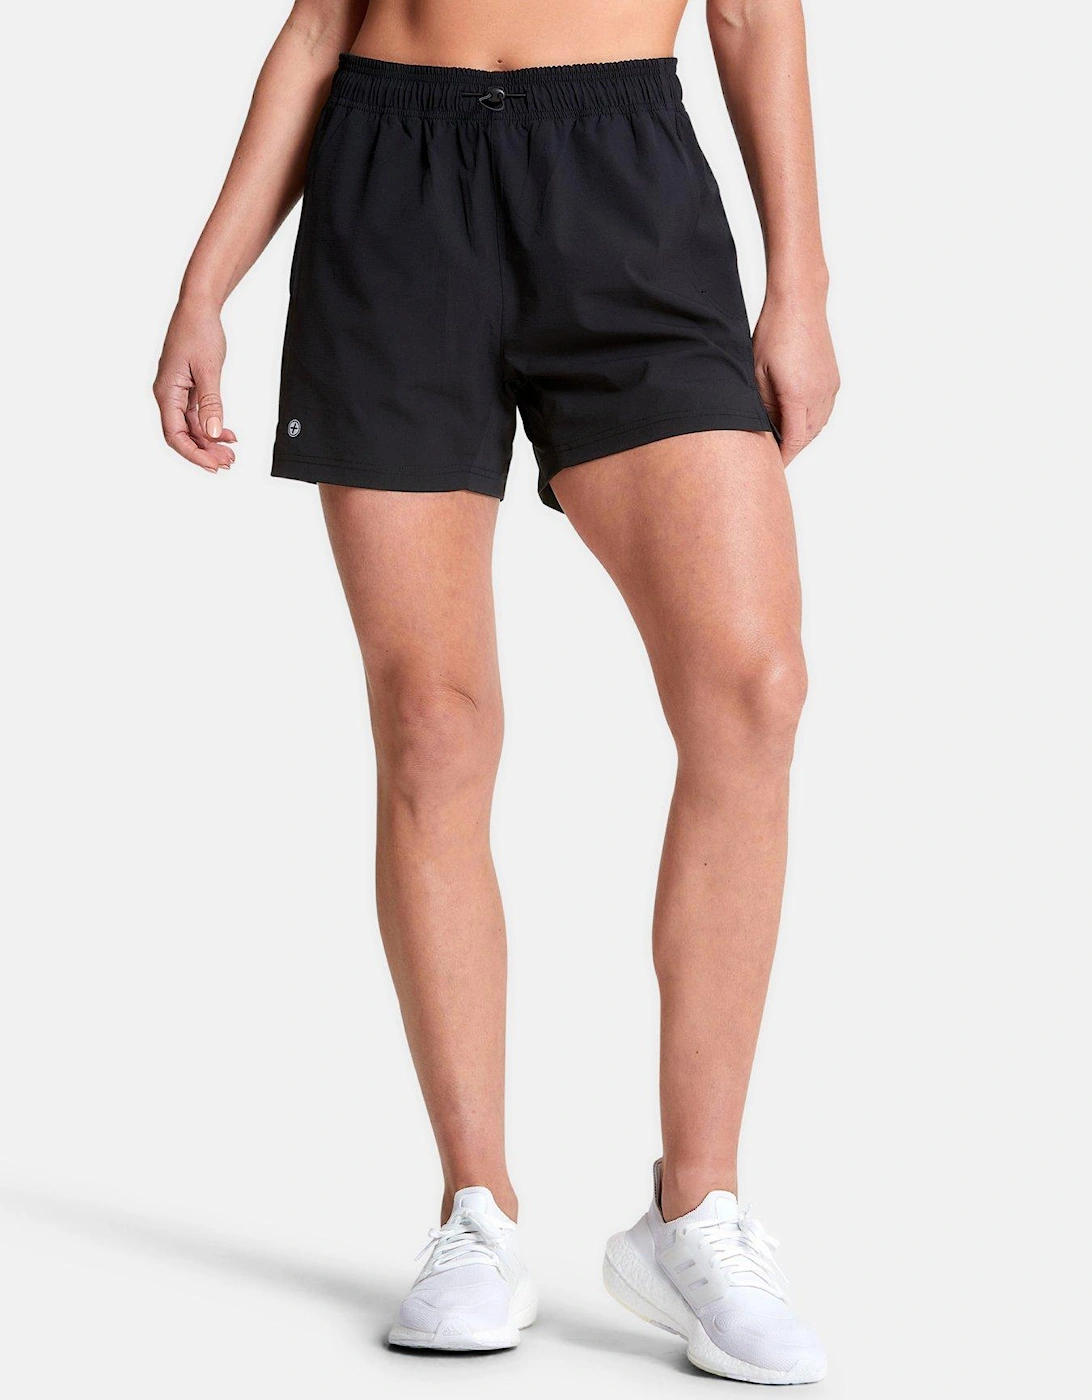 Celero Shorts - Black, 3 of 2